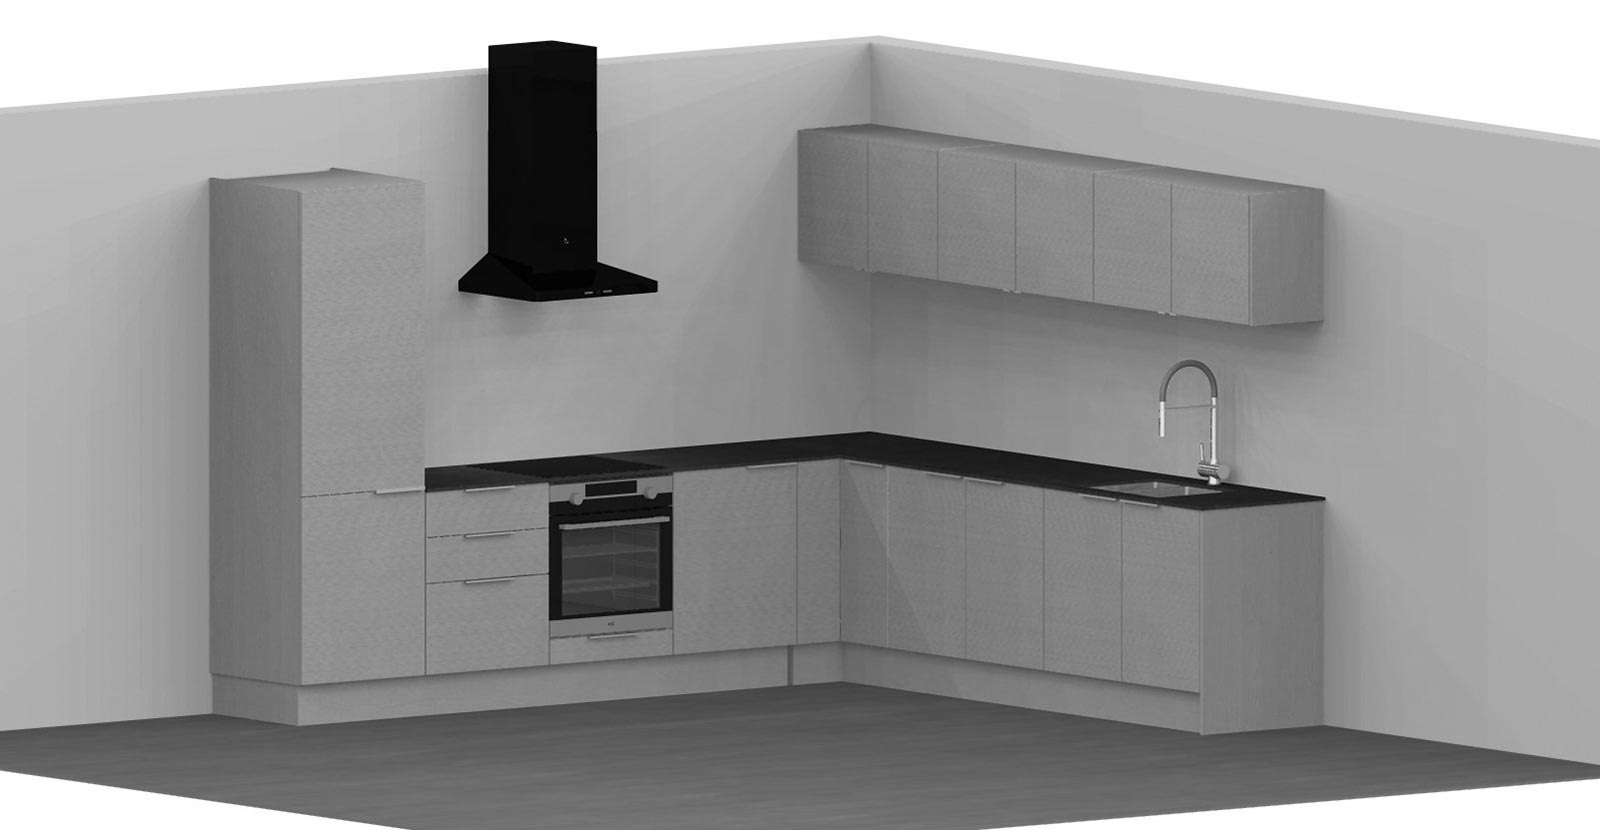 Default Miinus kitchen example - black and white render